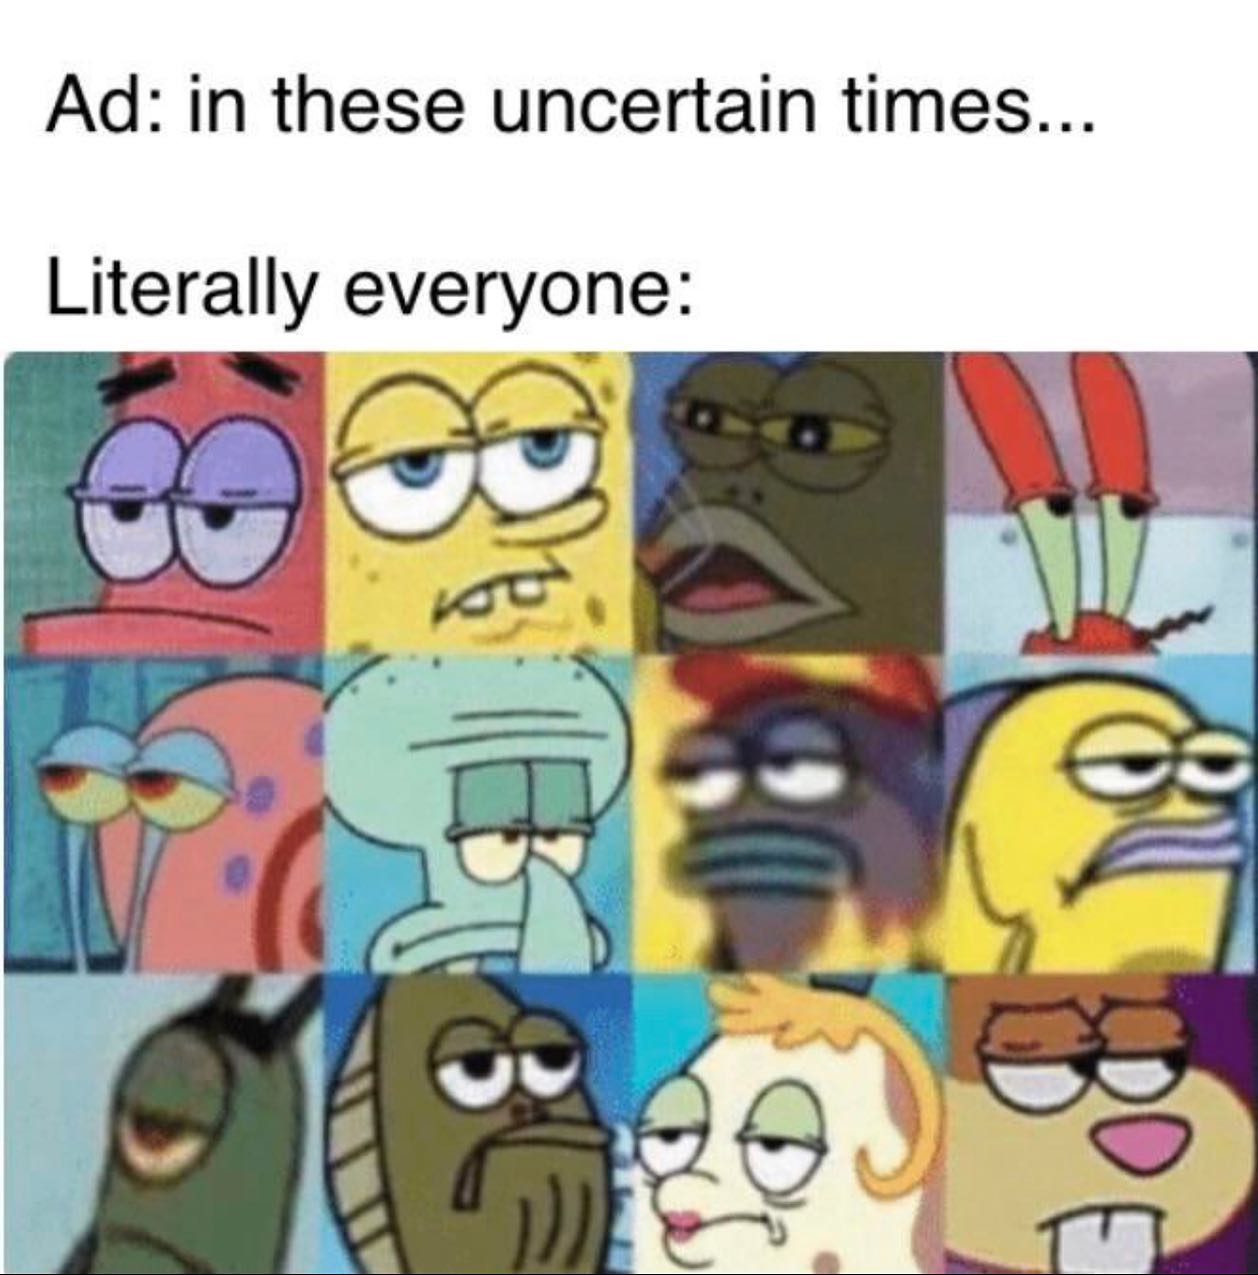 dank memes - spongebob headphones meme - Ad in these uncertain times... Literally everyone 8 Gg